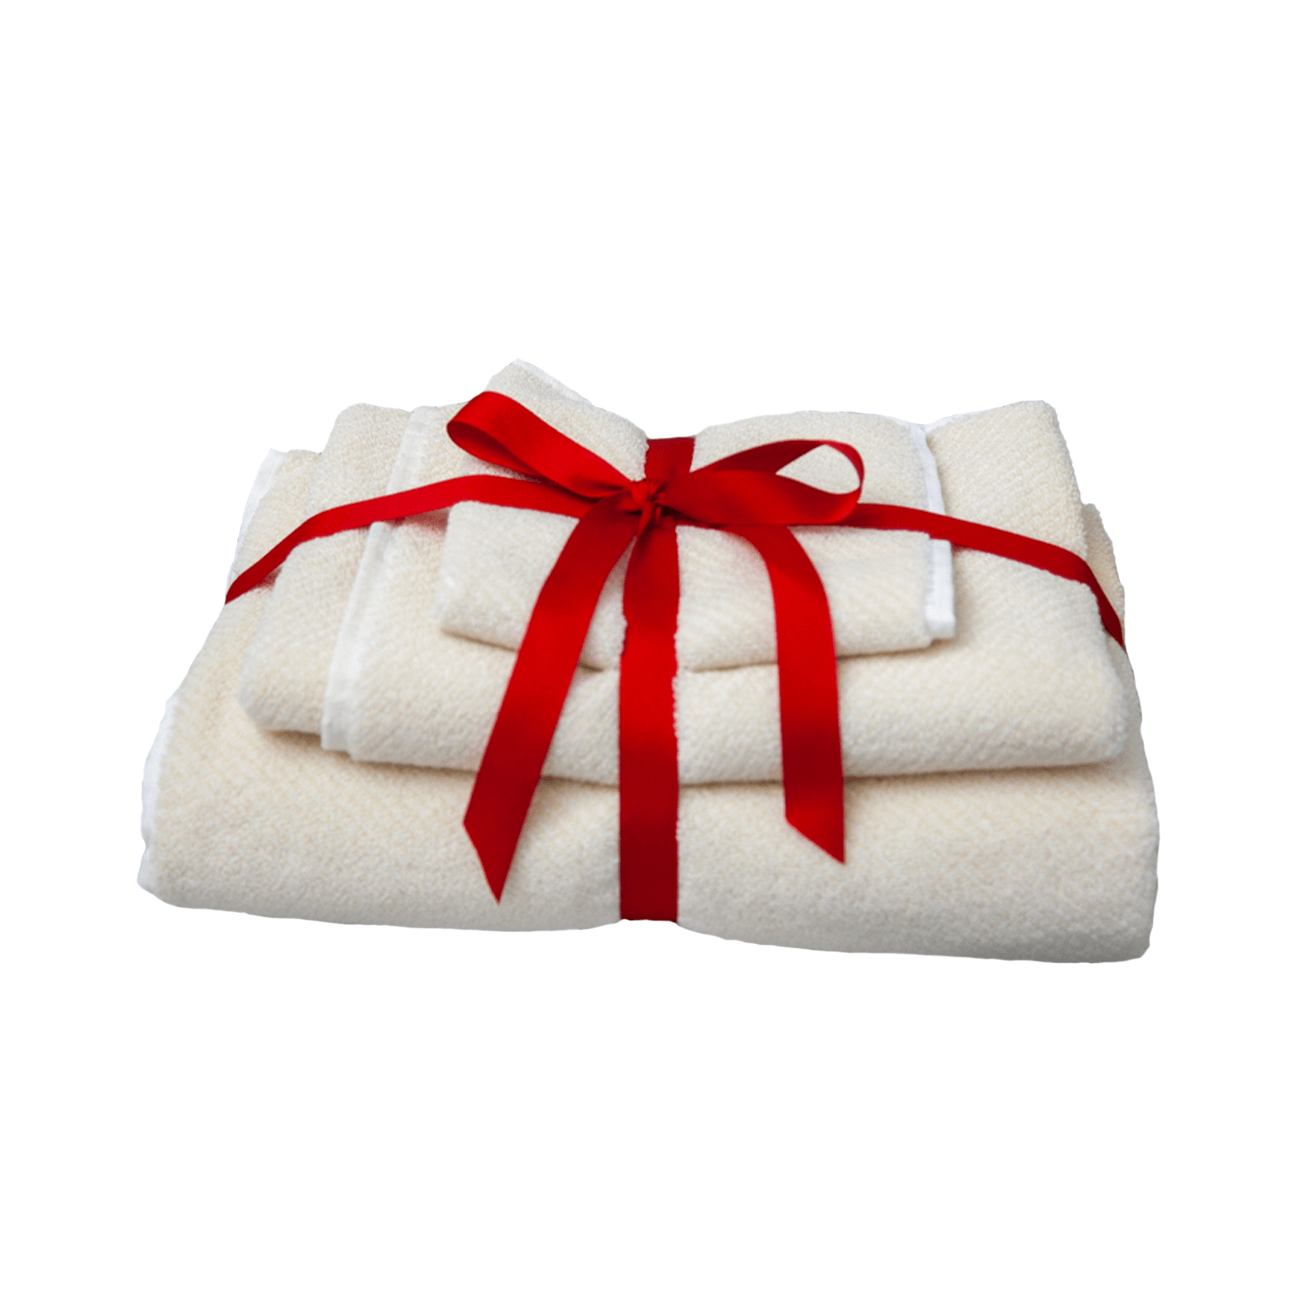 Muz Linen Hemp Natural by Turkish Towel Collection